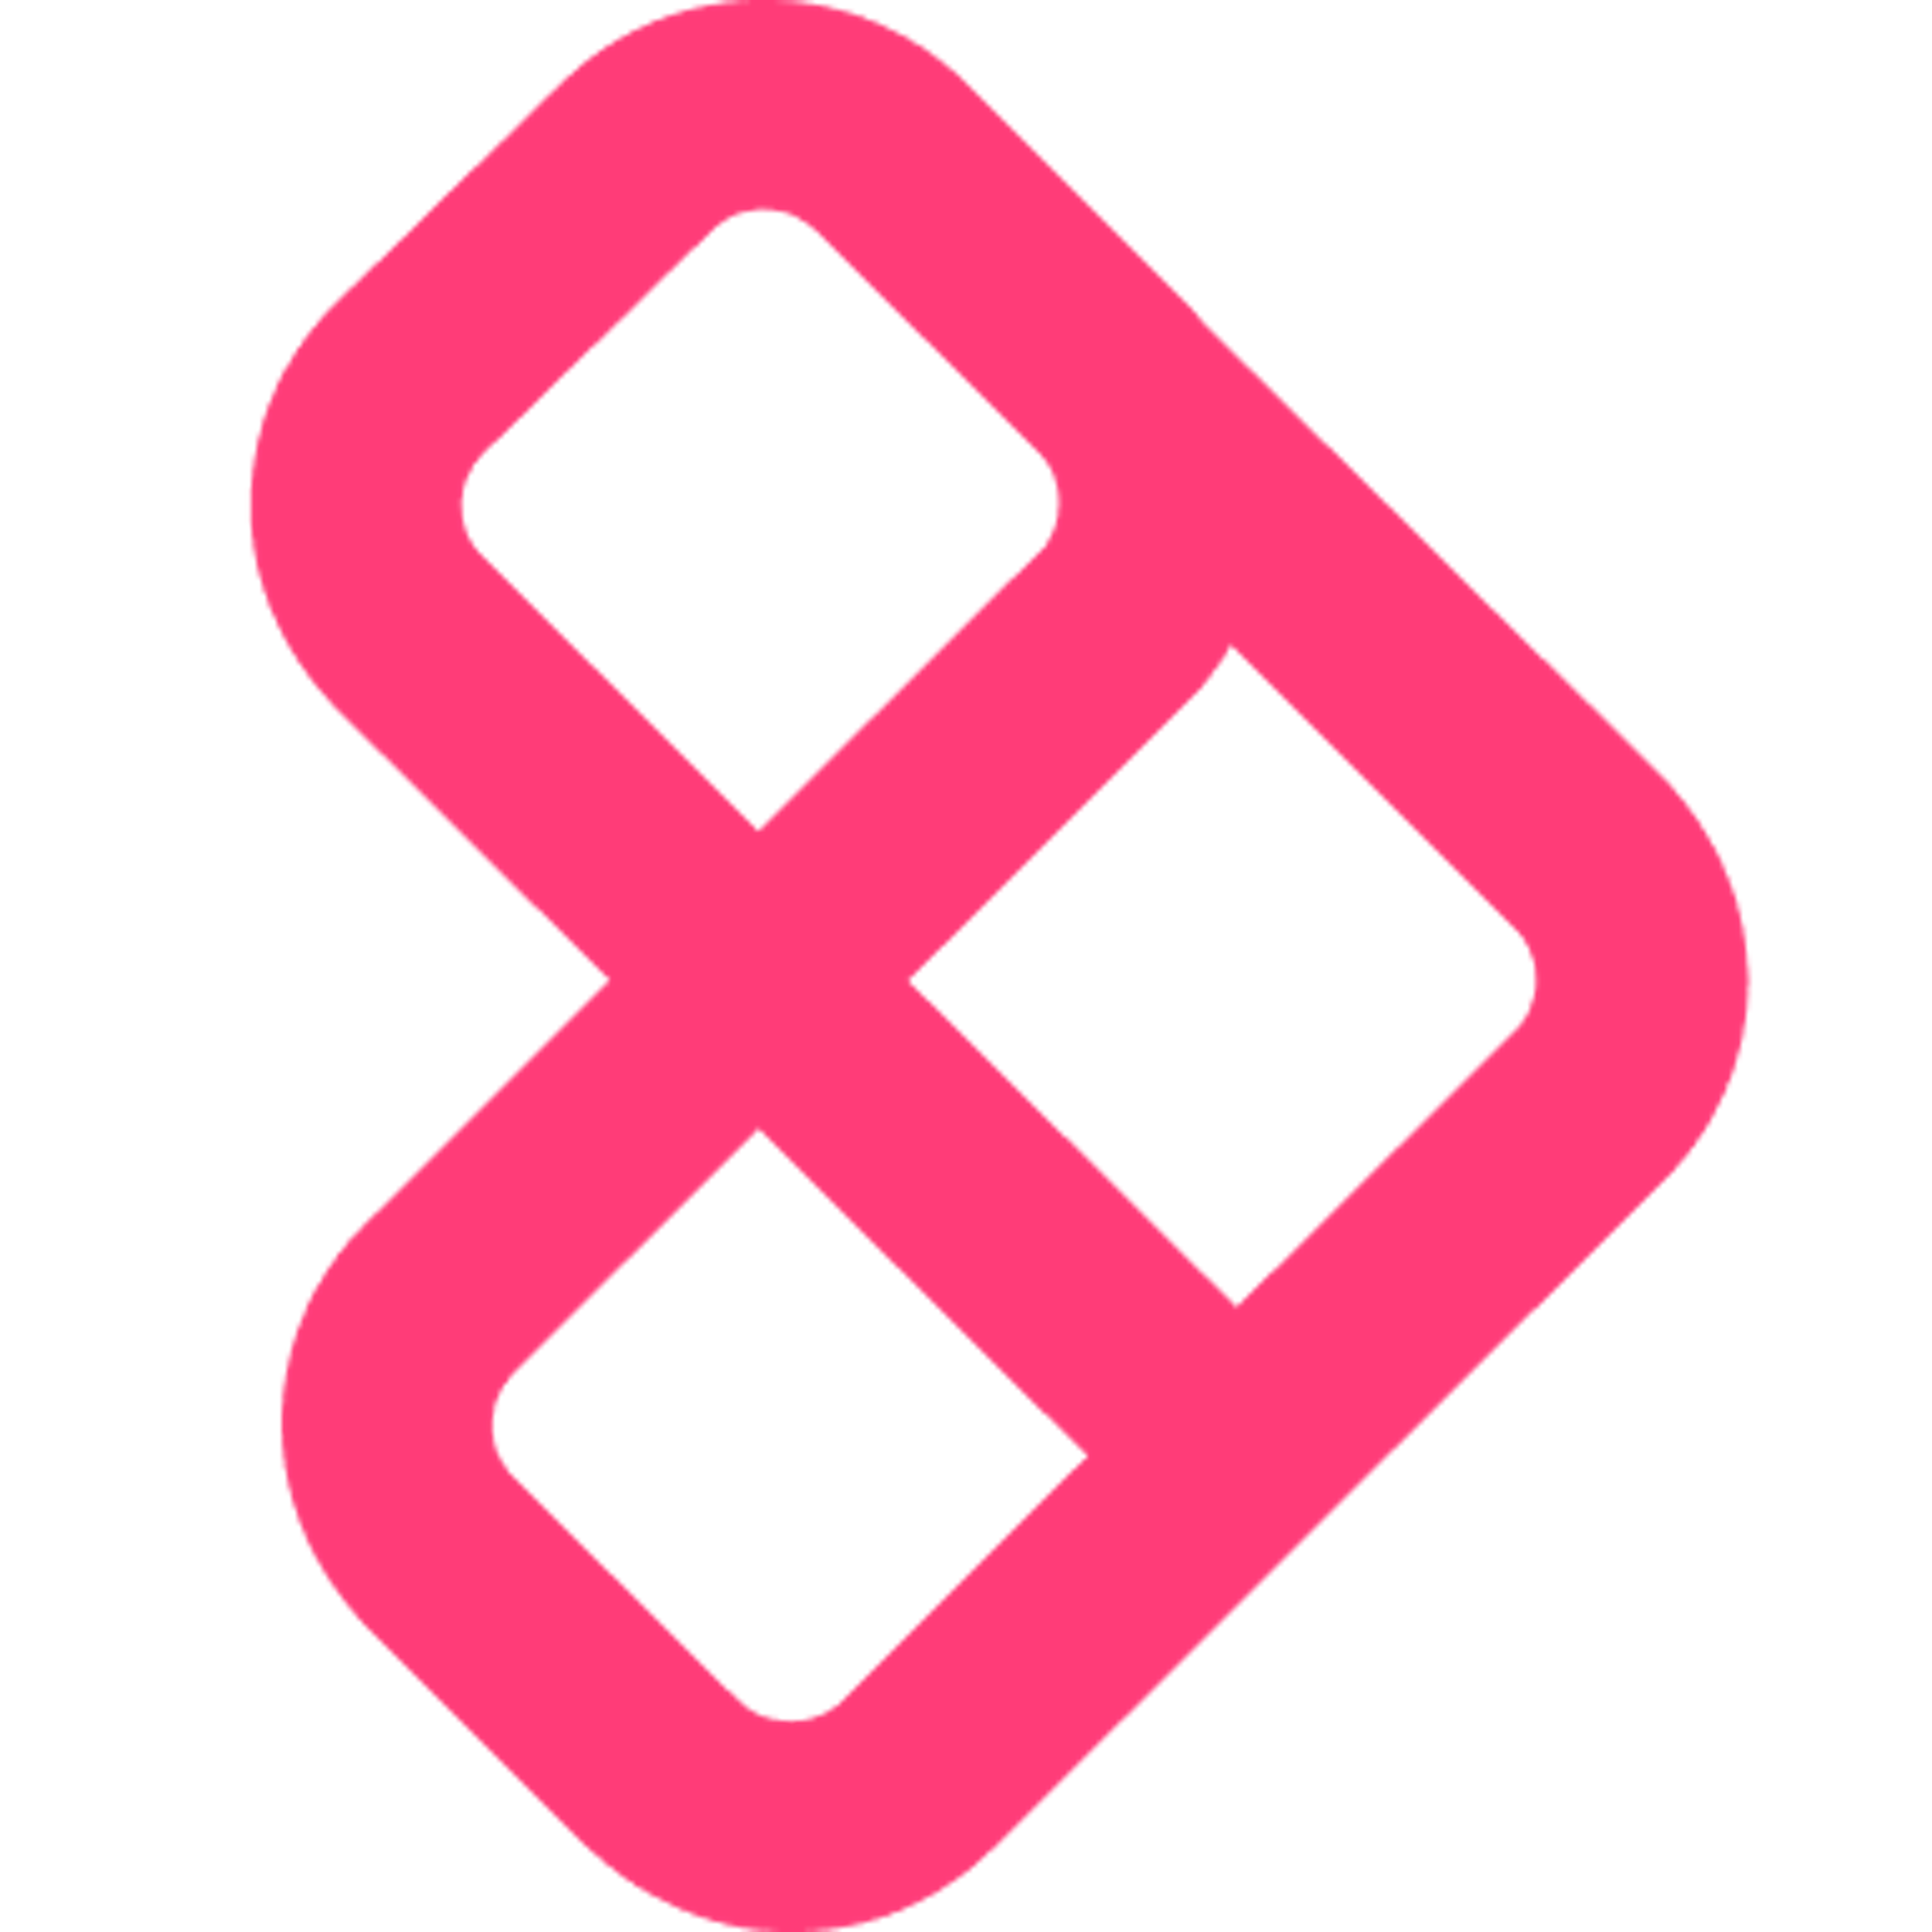 Sendlane Logo